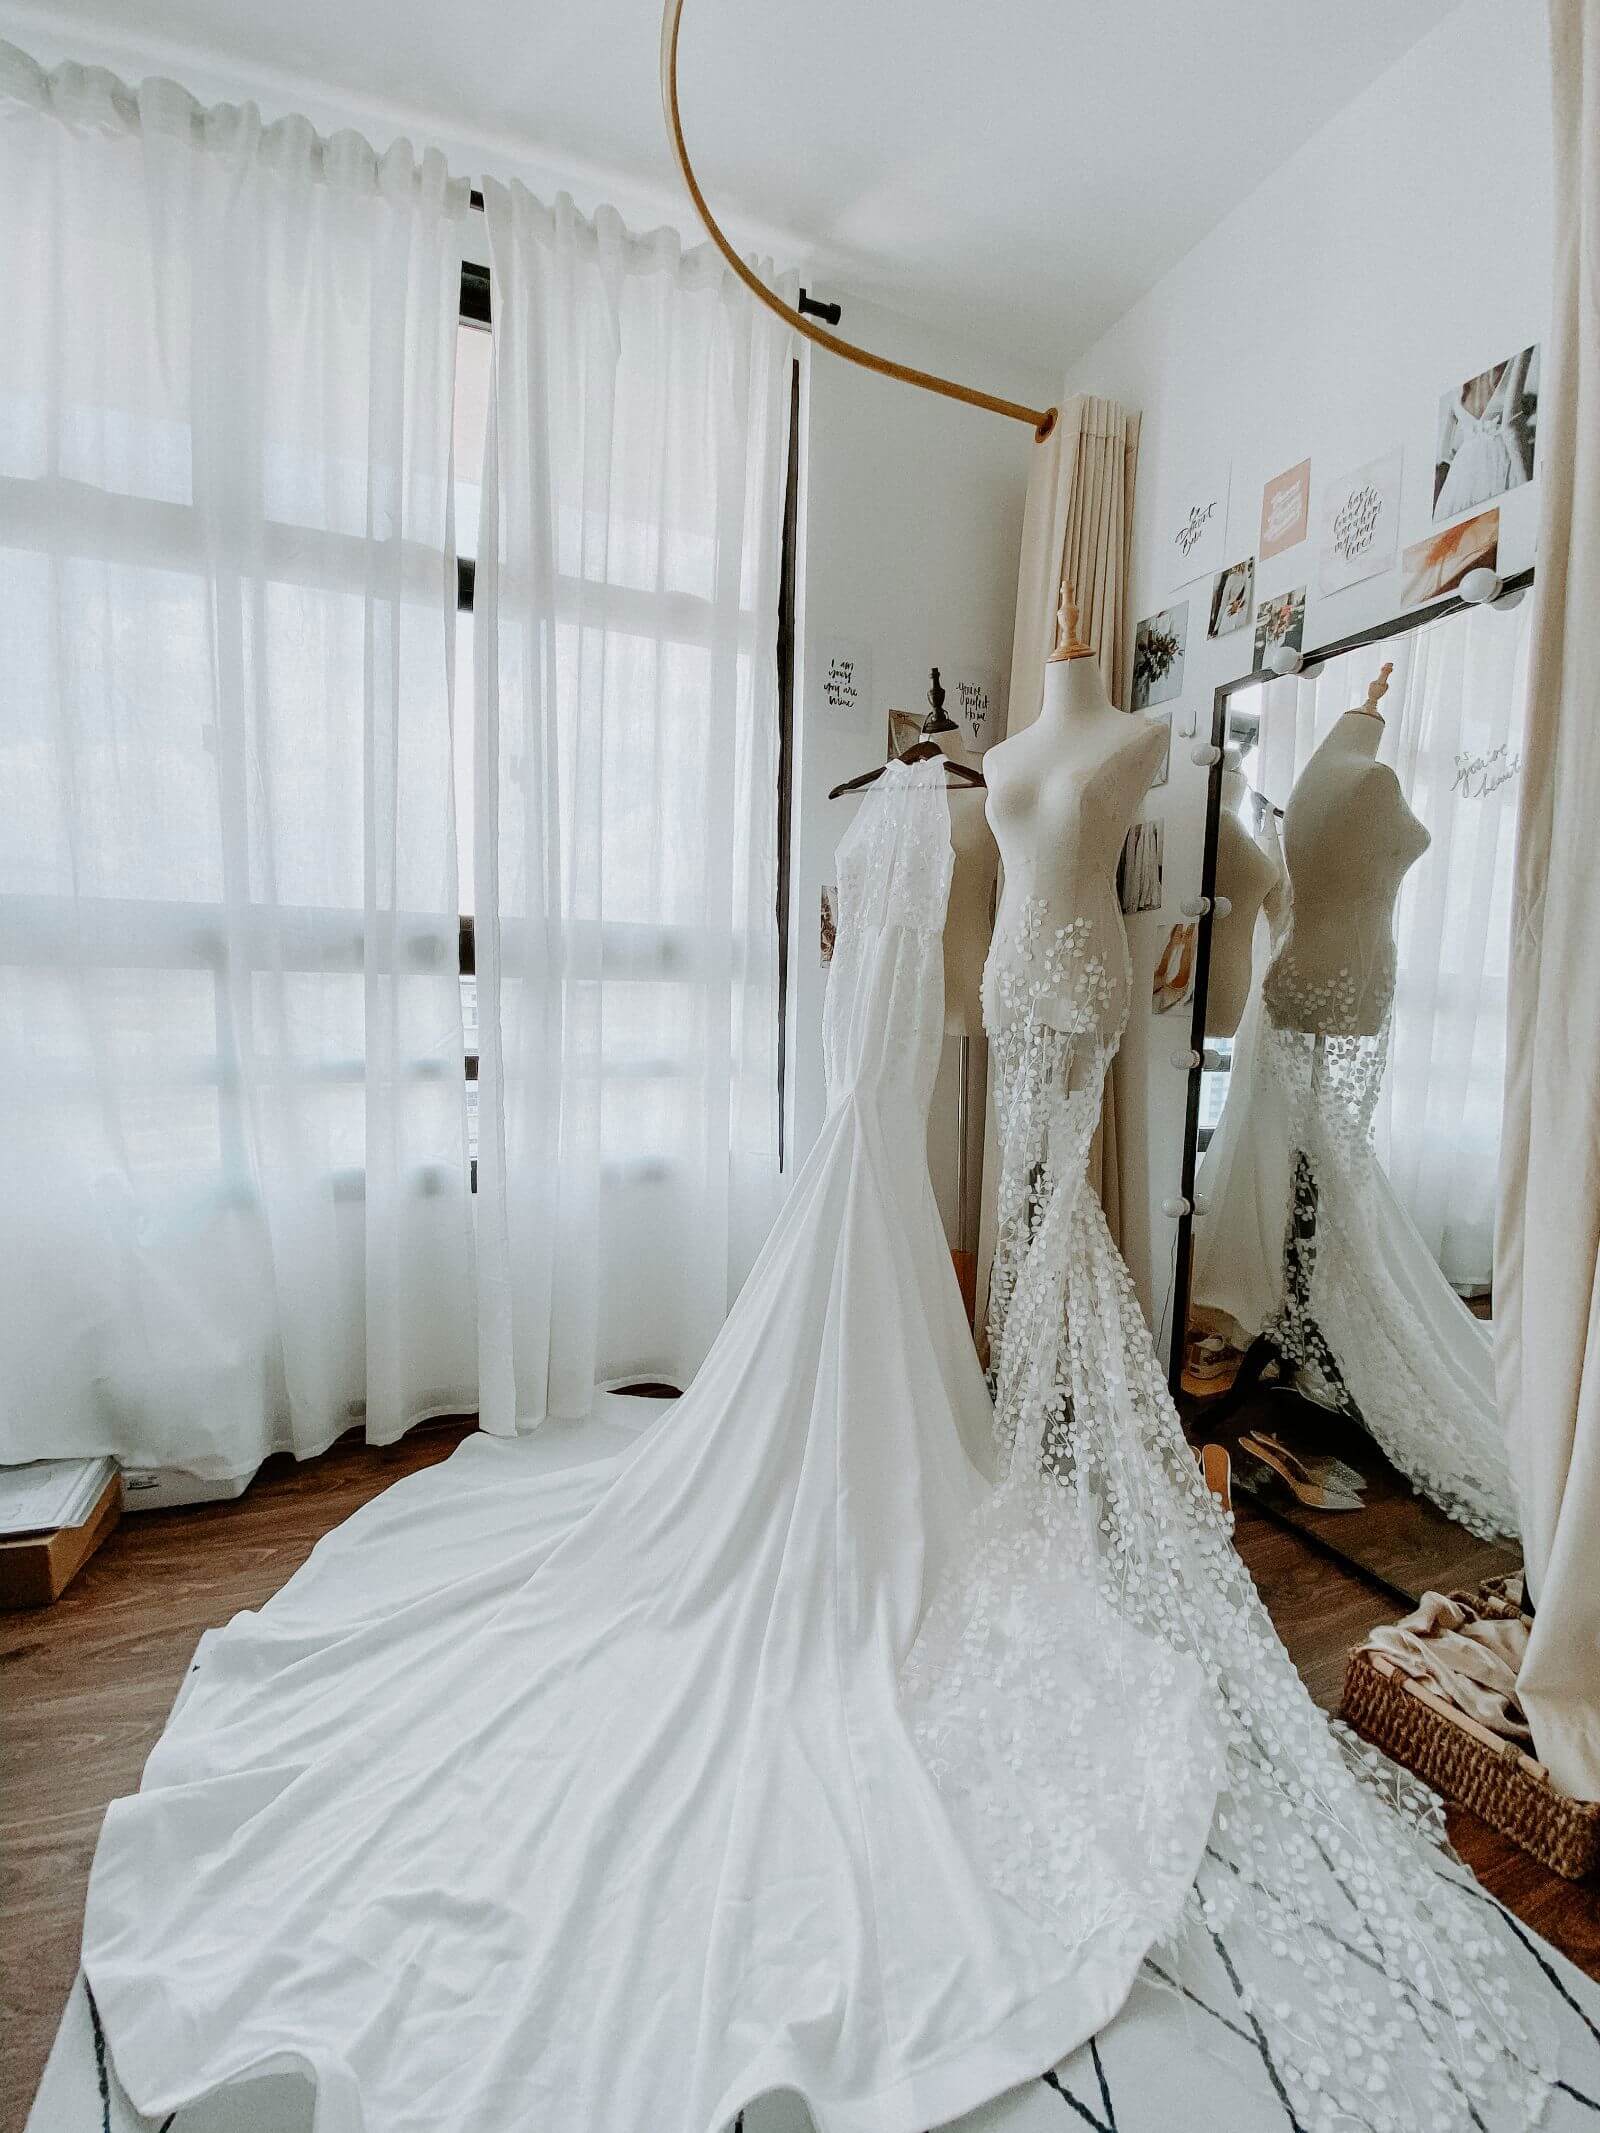 (已失效)Bespoke Wedding Dress (Home Studio)